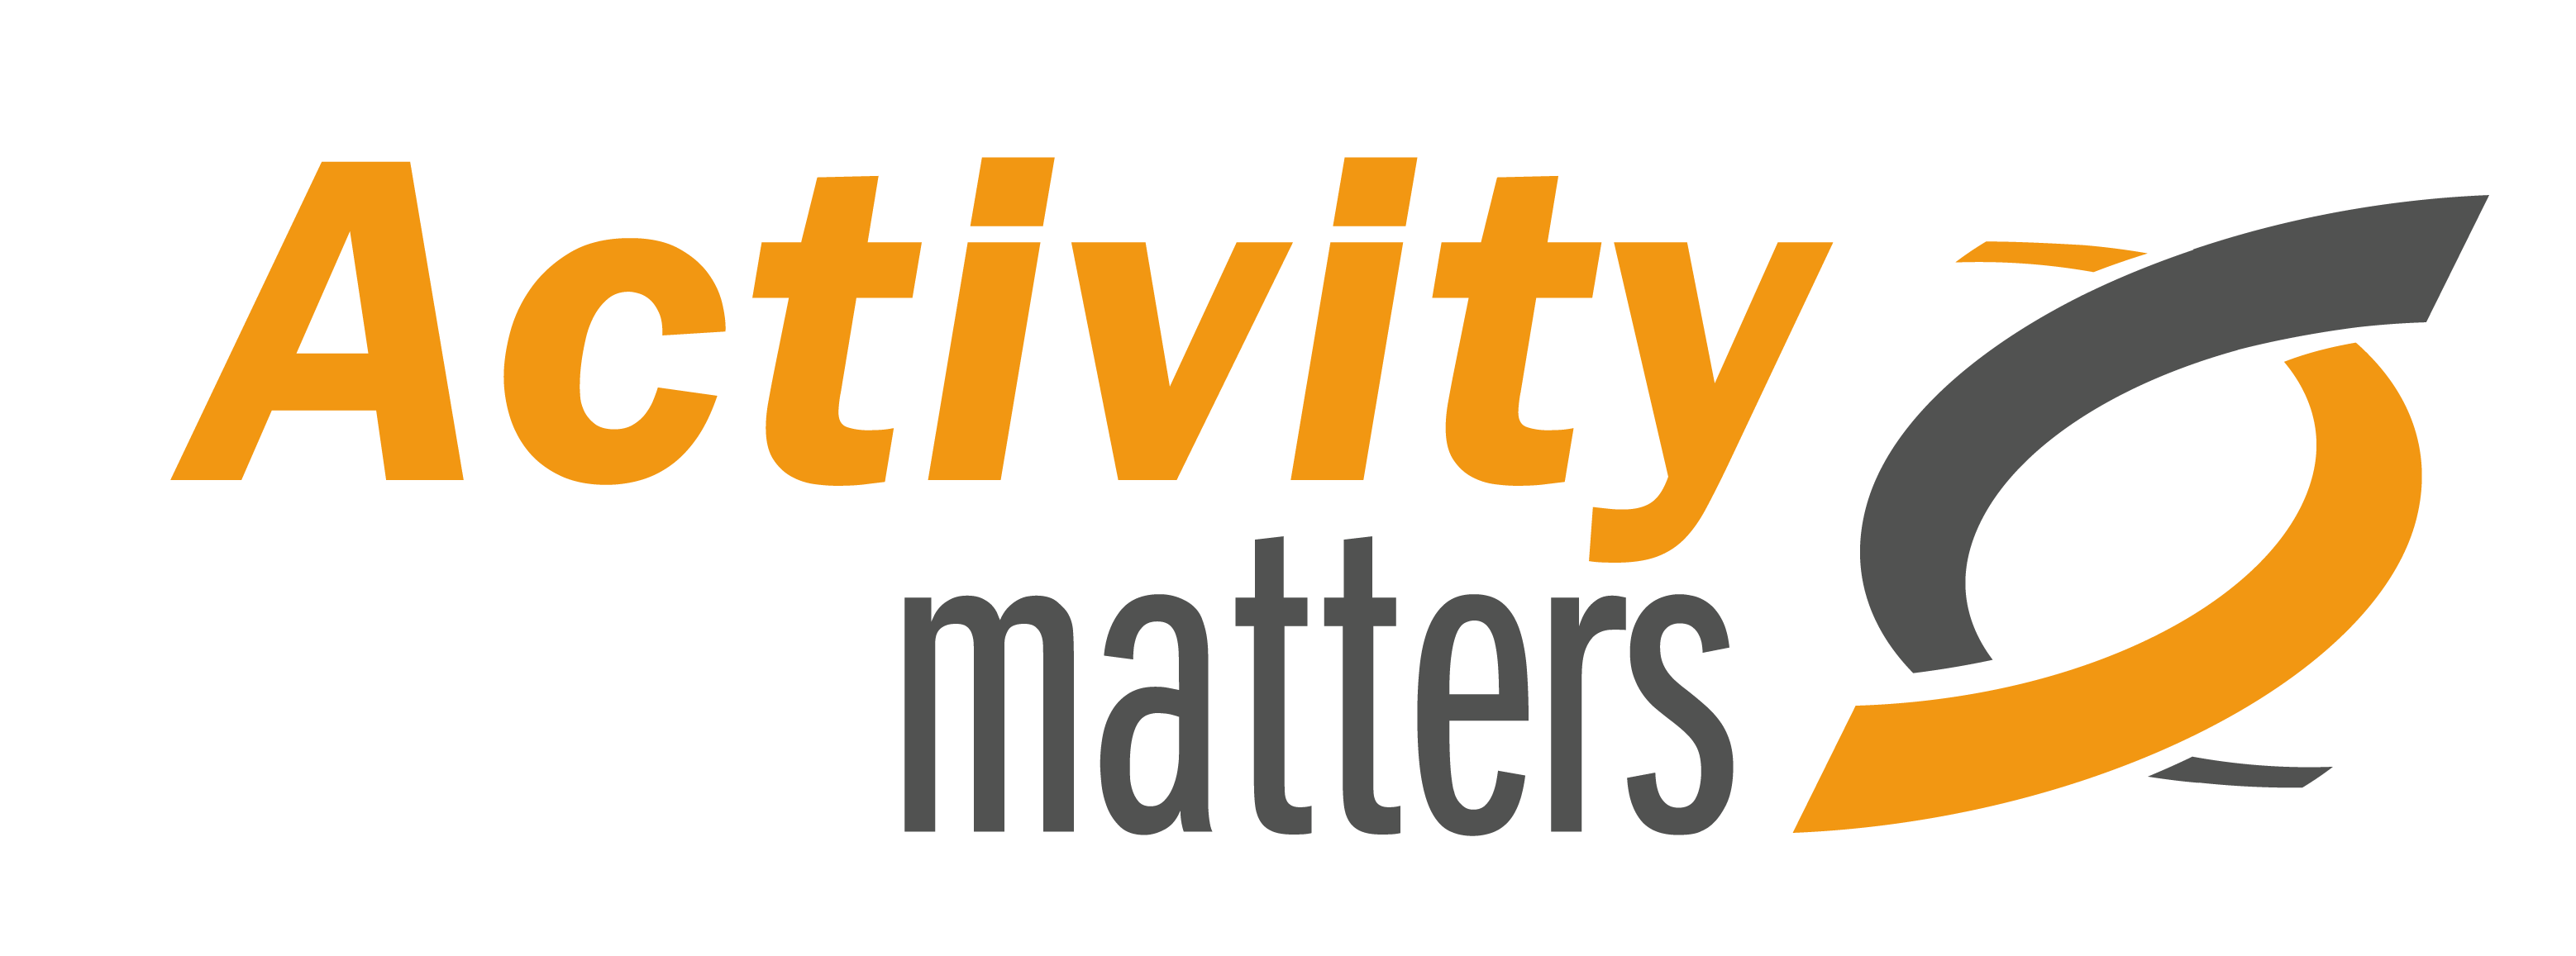 Activity-Matters